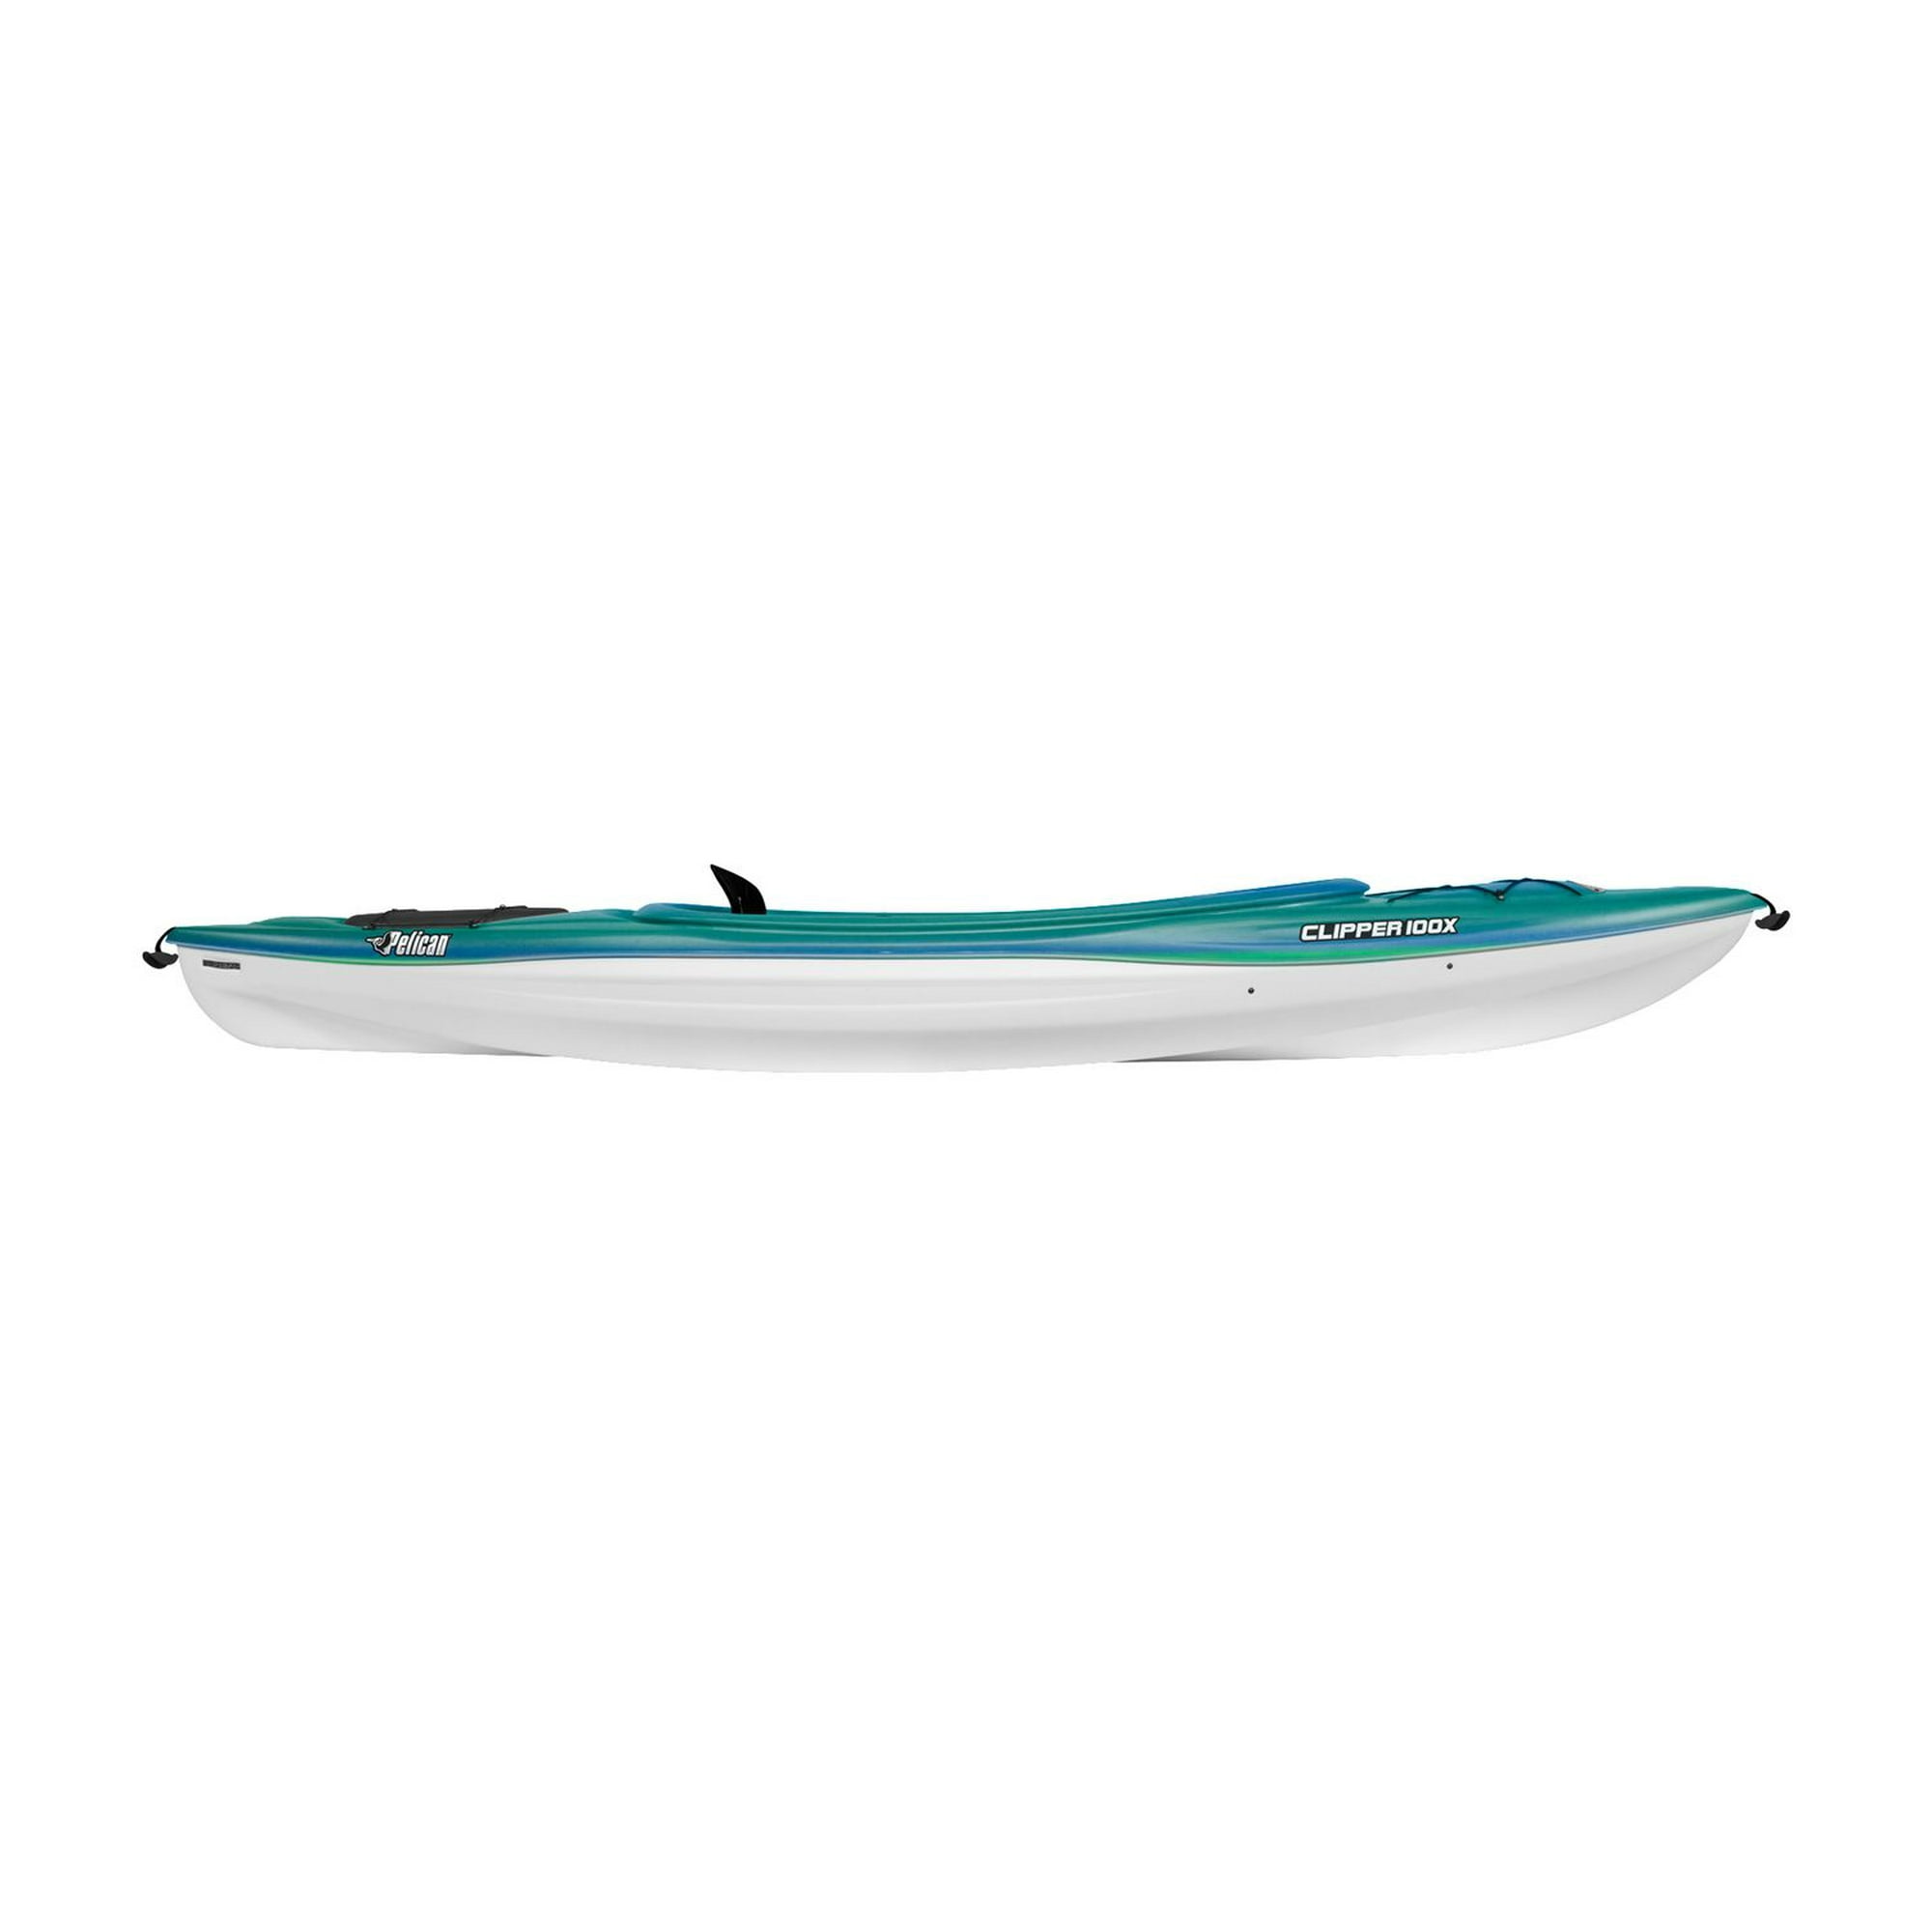 Pelican - Argo 100X - Sit-in Kayak - Lightweight one Person Kayak